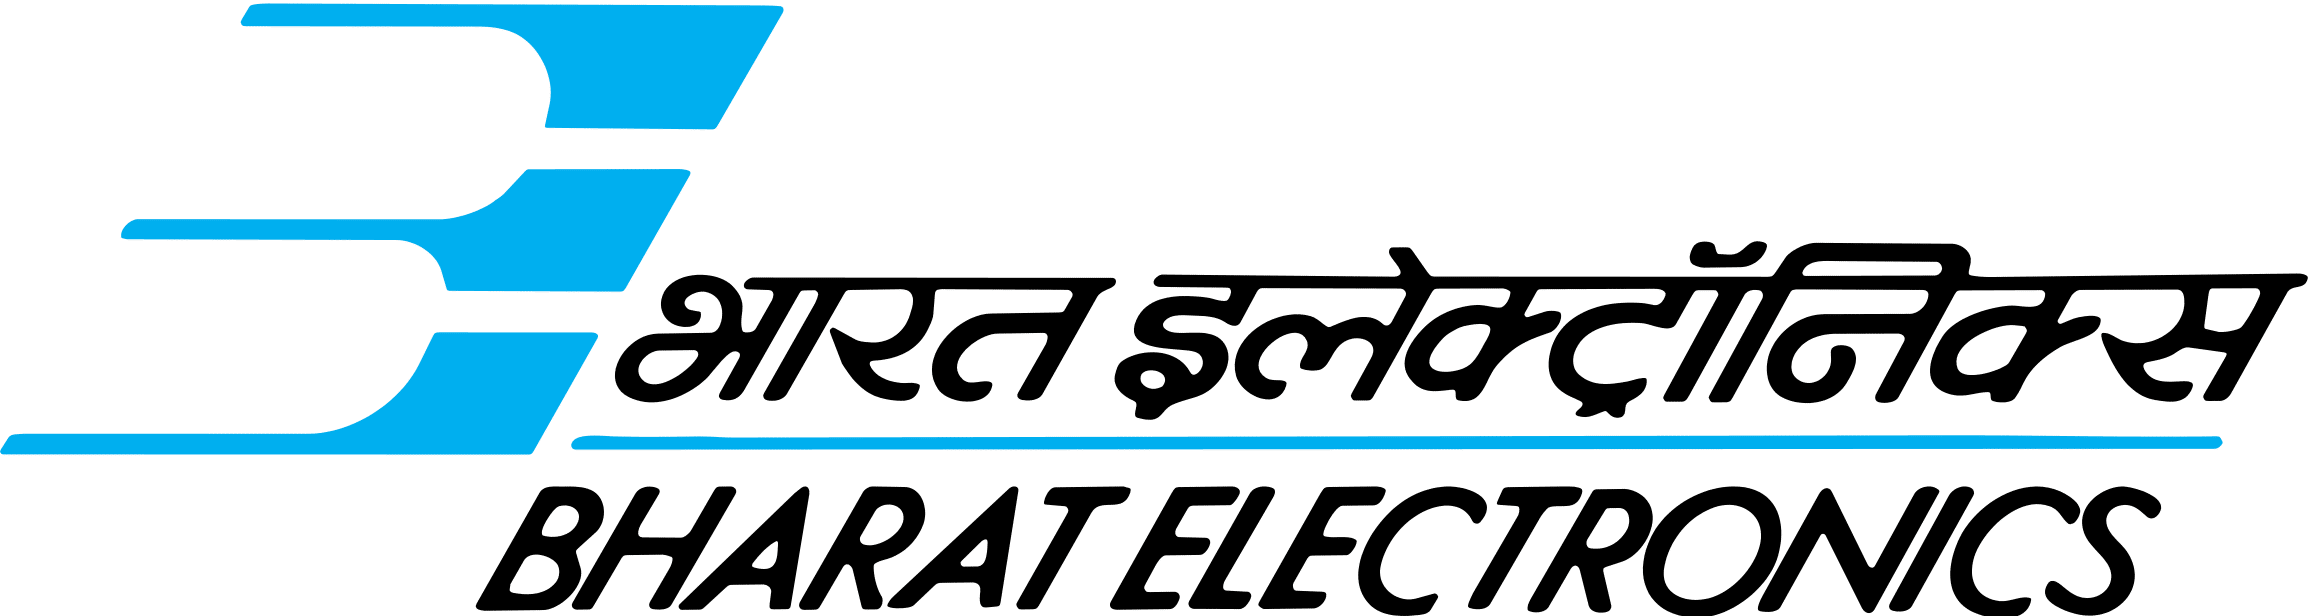 Bharat_Electronics